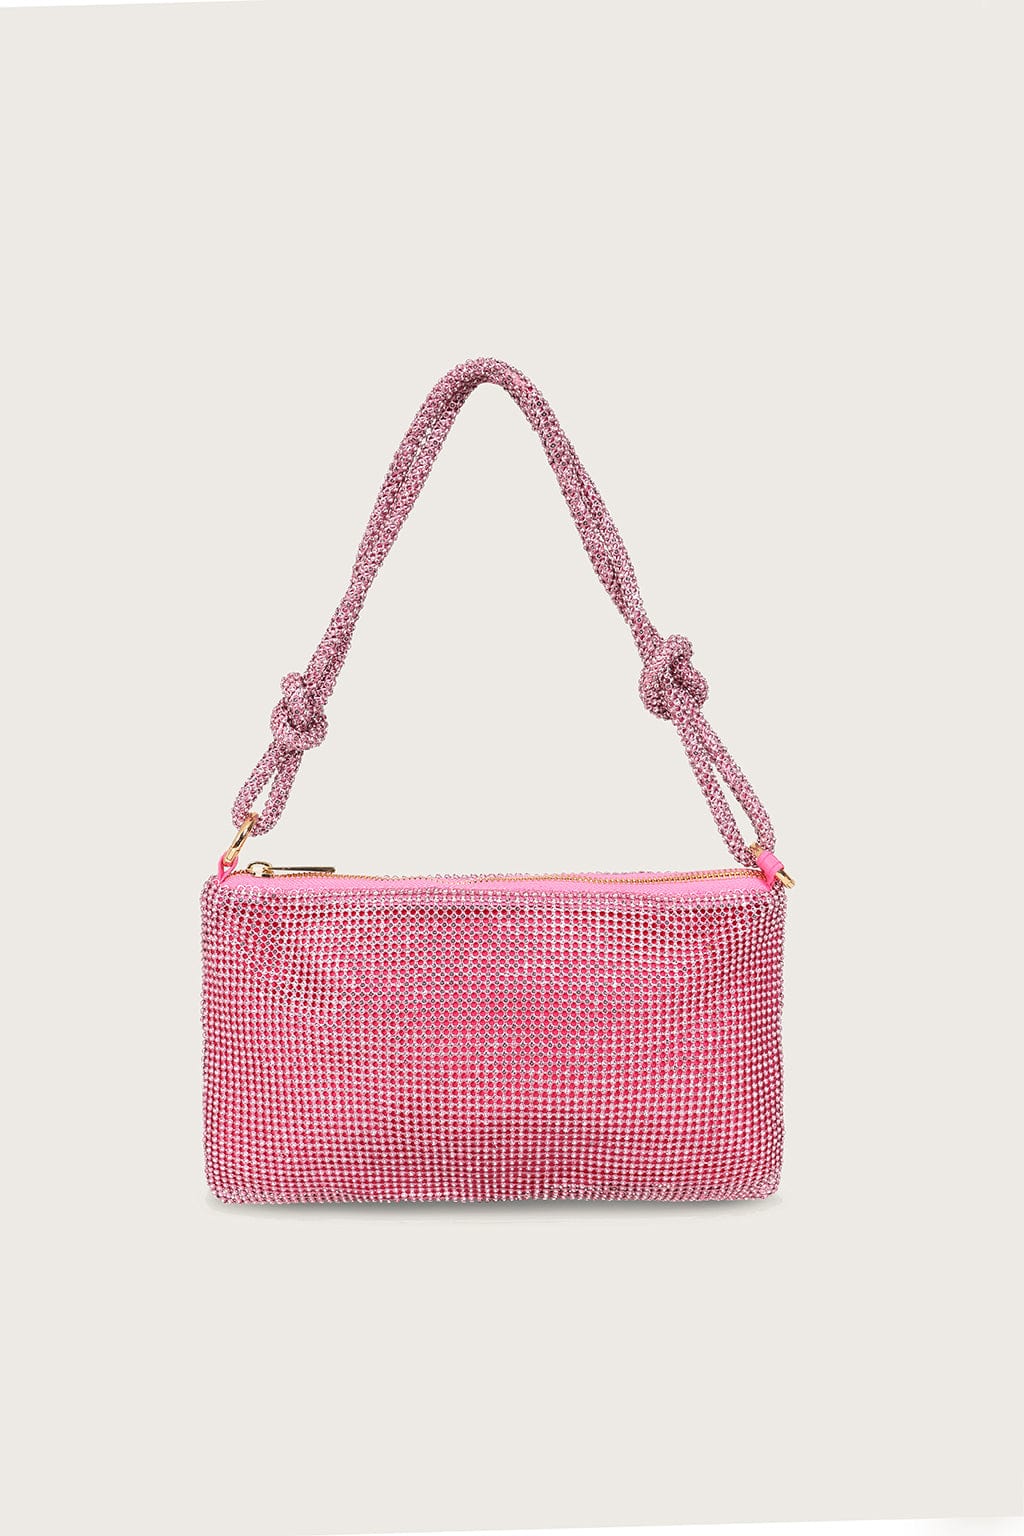 DINA Rhinestone Mini Shoulder Bag in Pink